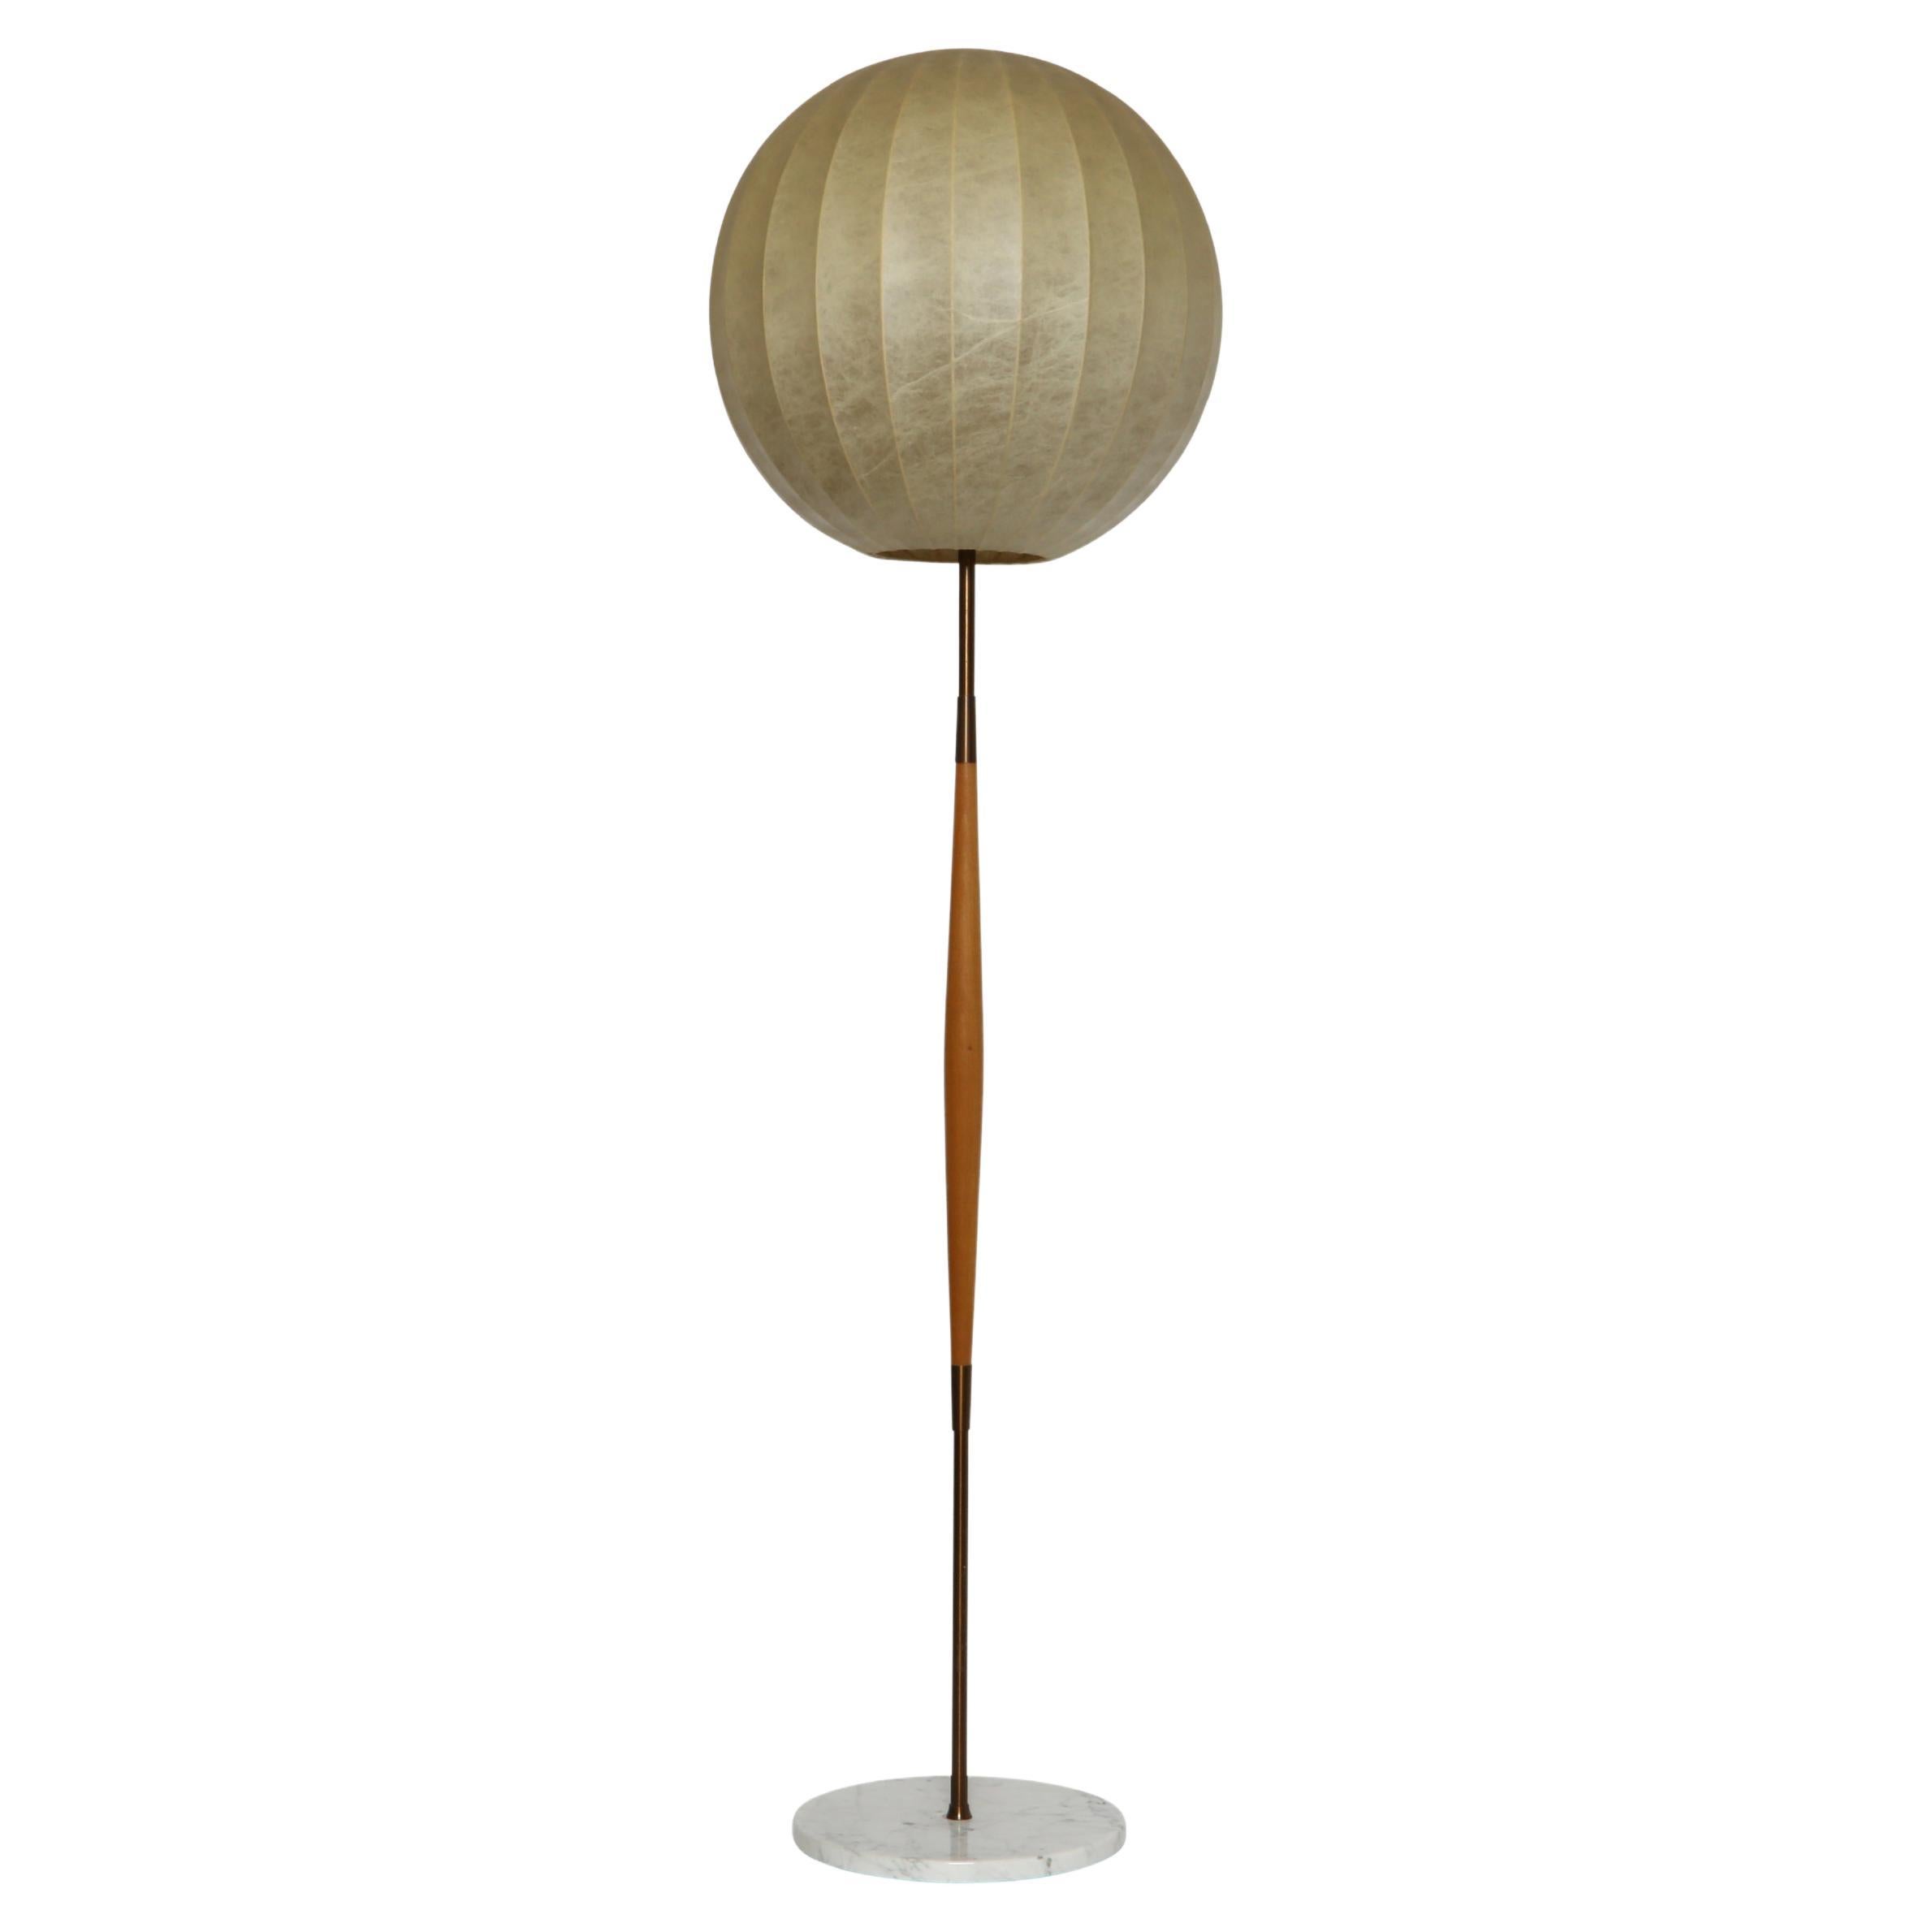 Achille Castiglioni for Flos Cocoon Floor Lamp, Attributed